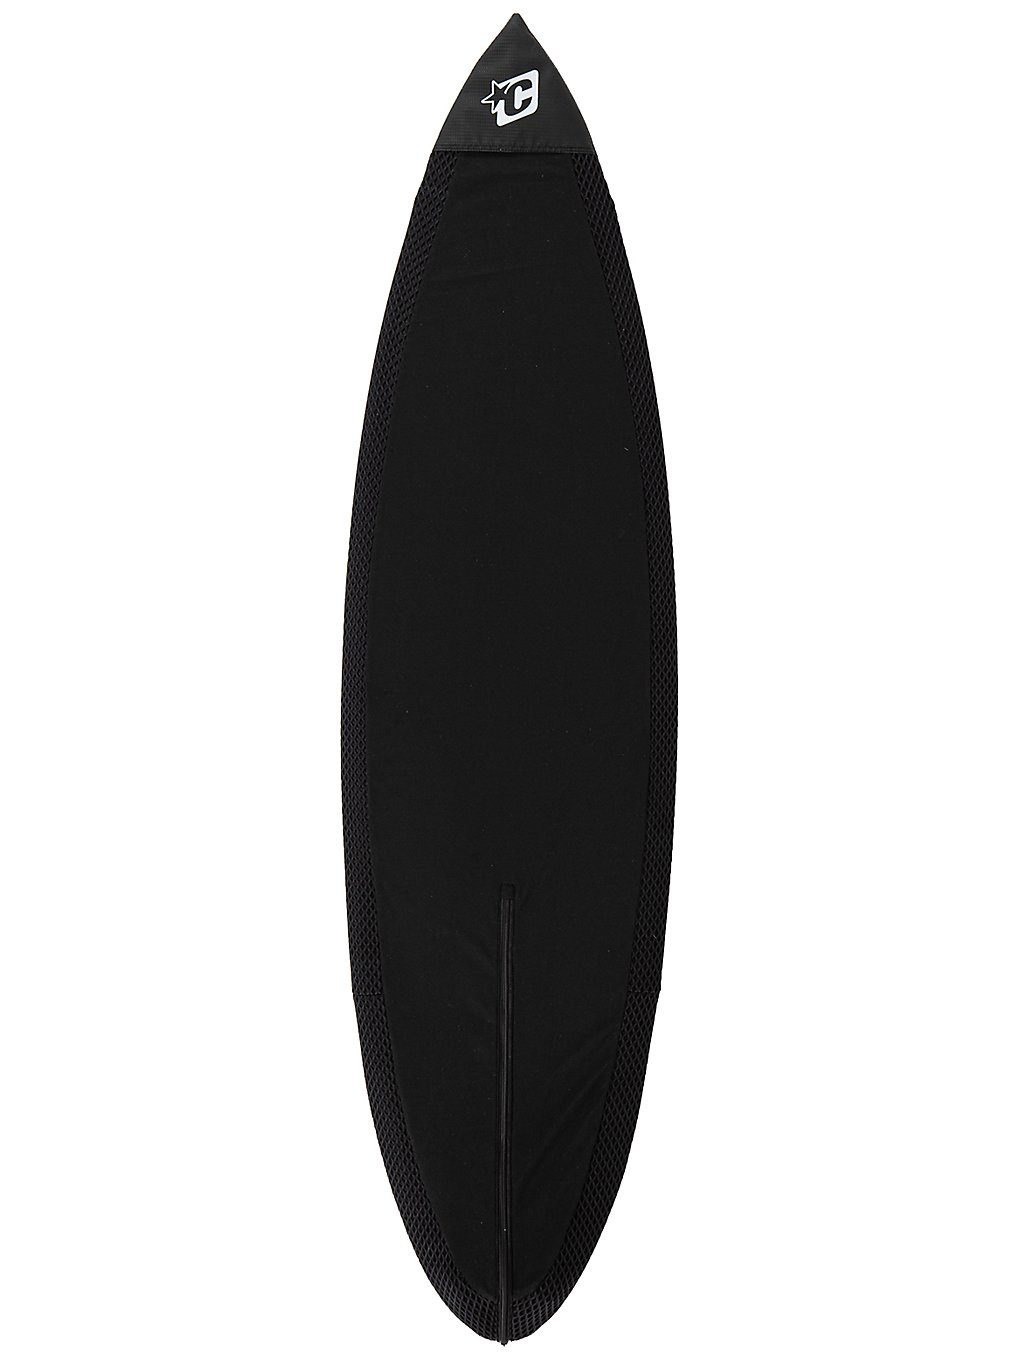 Creatures of Leisure Shortboard Aero Light Sox 5'8 Surfboard Bag black kaufen